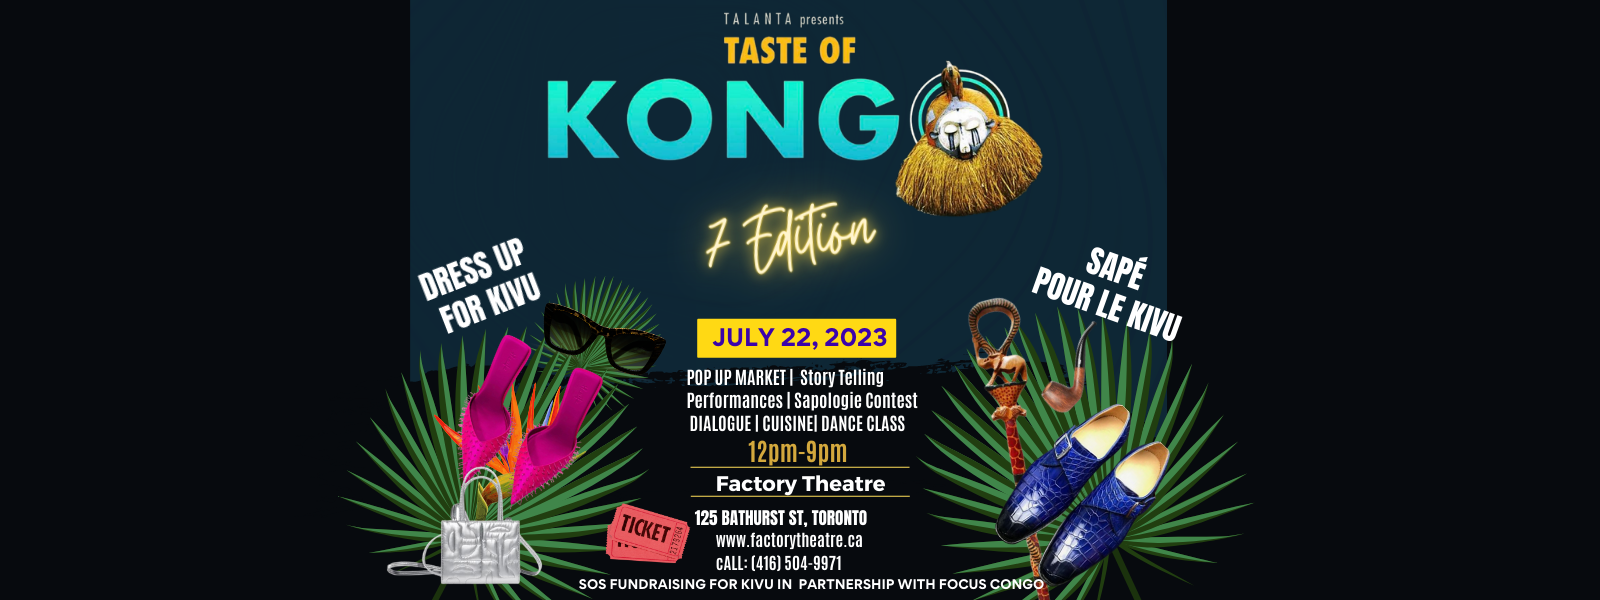 Taste Of Kongo 7 Edition show poster